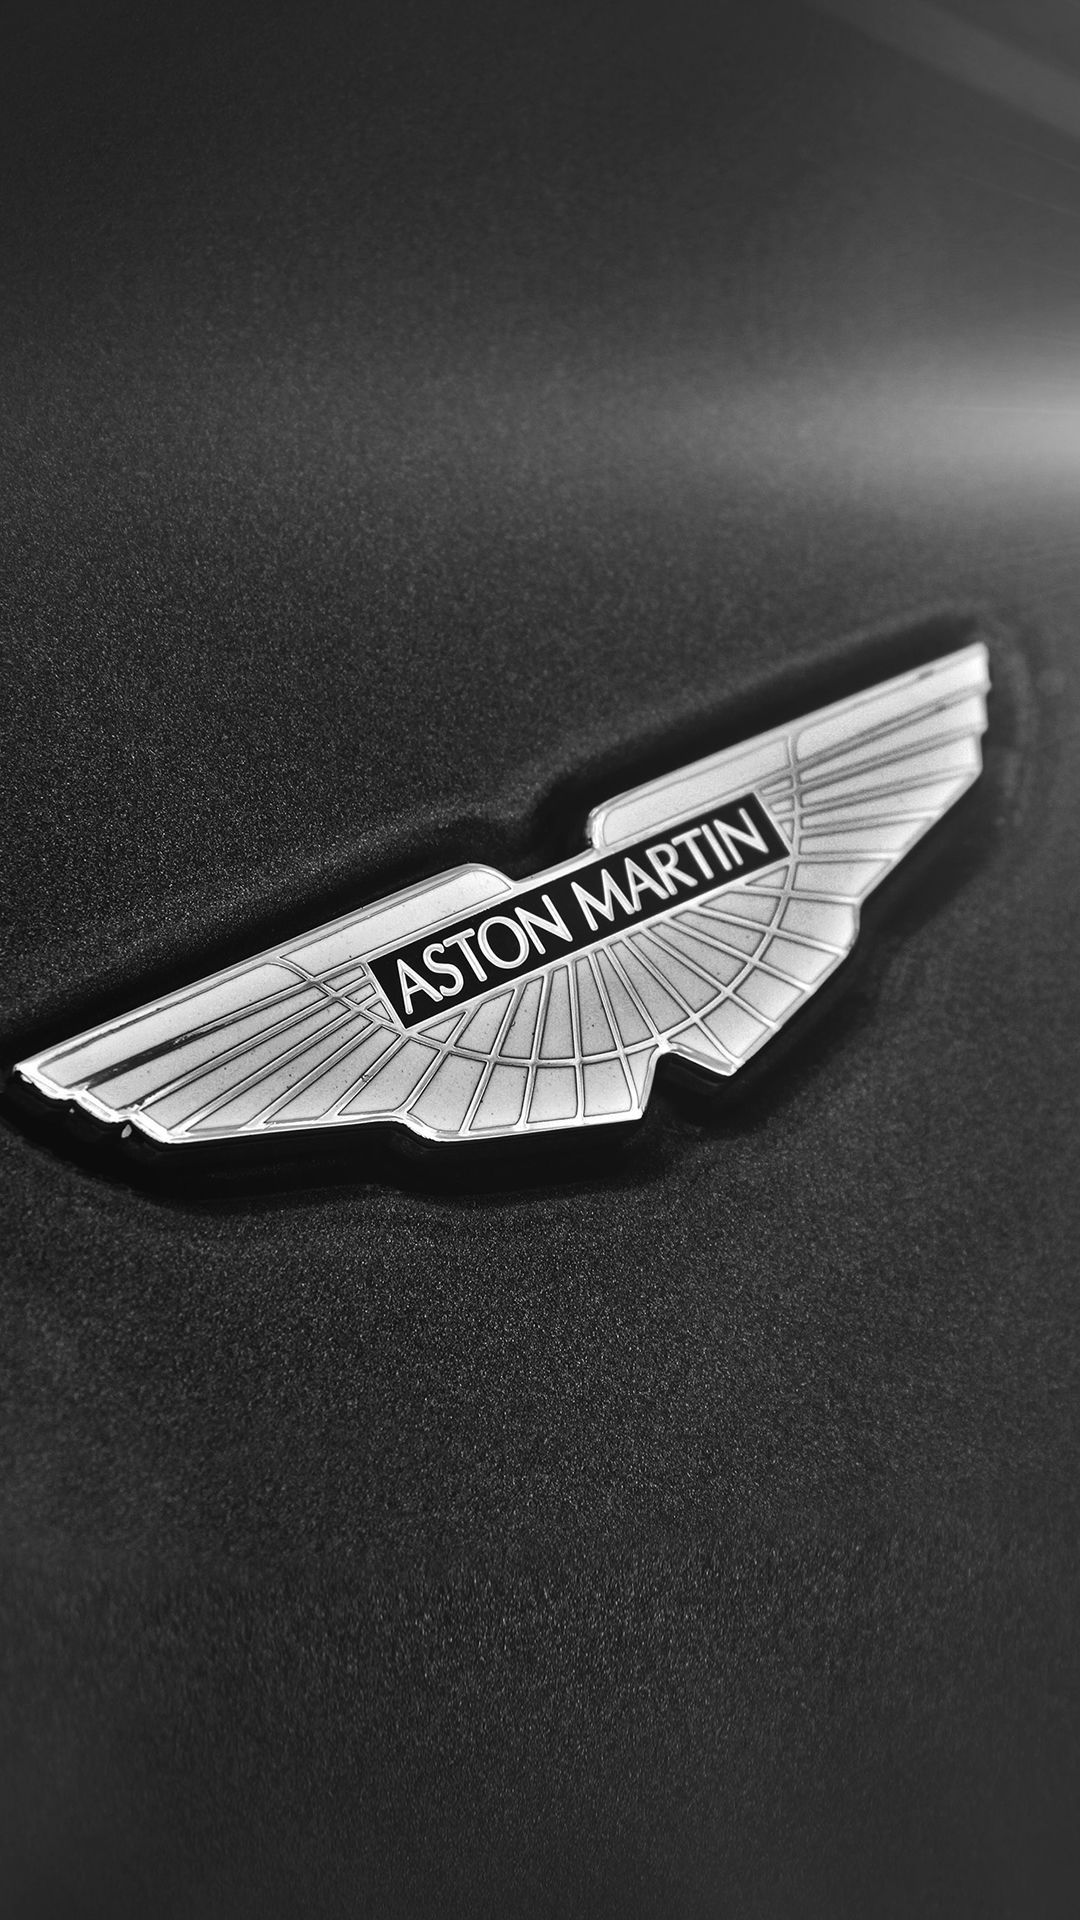 Simple Aston Martin Logo Dark Background iPhone 6 Wallpaper Download. iPhone Wallpaper, iPad wallpap. Aston martin, Aston martin cars, Harley davidson wallpaper